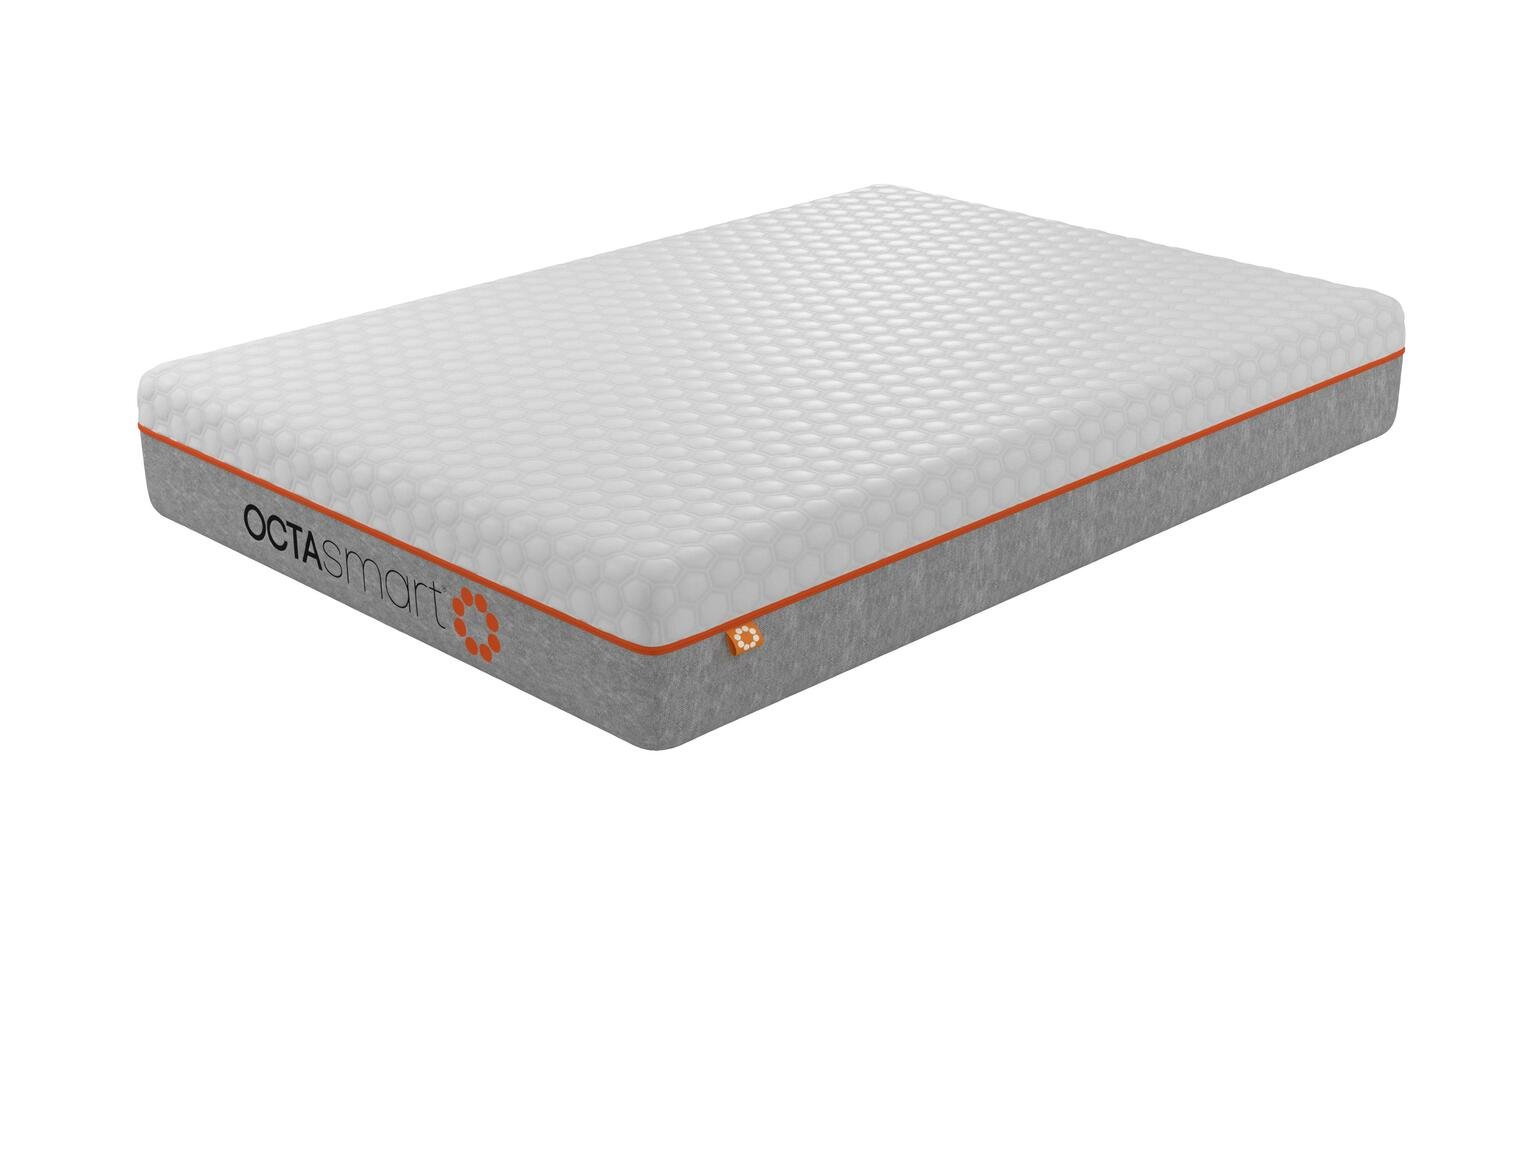 dormeo octasmart mattress reviews